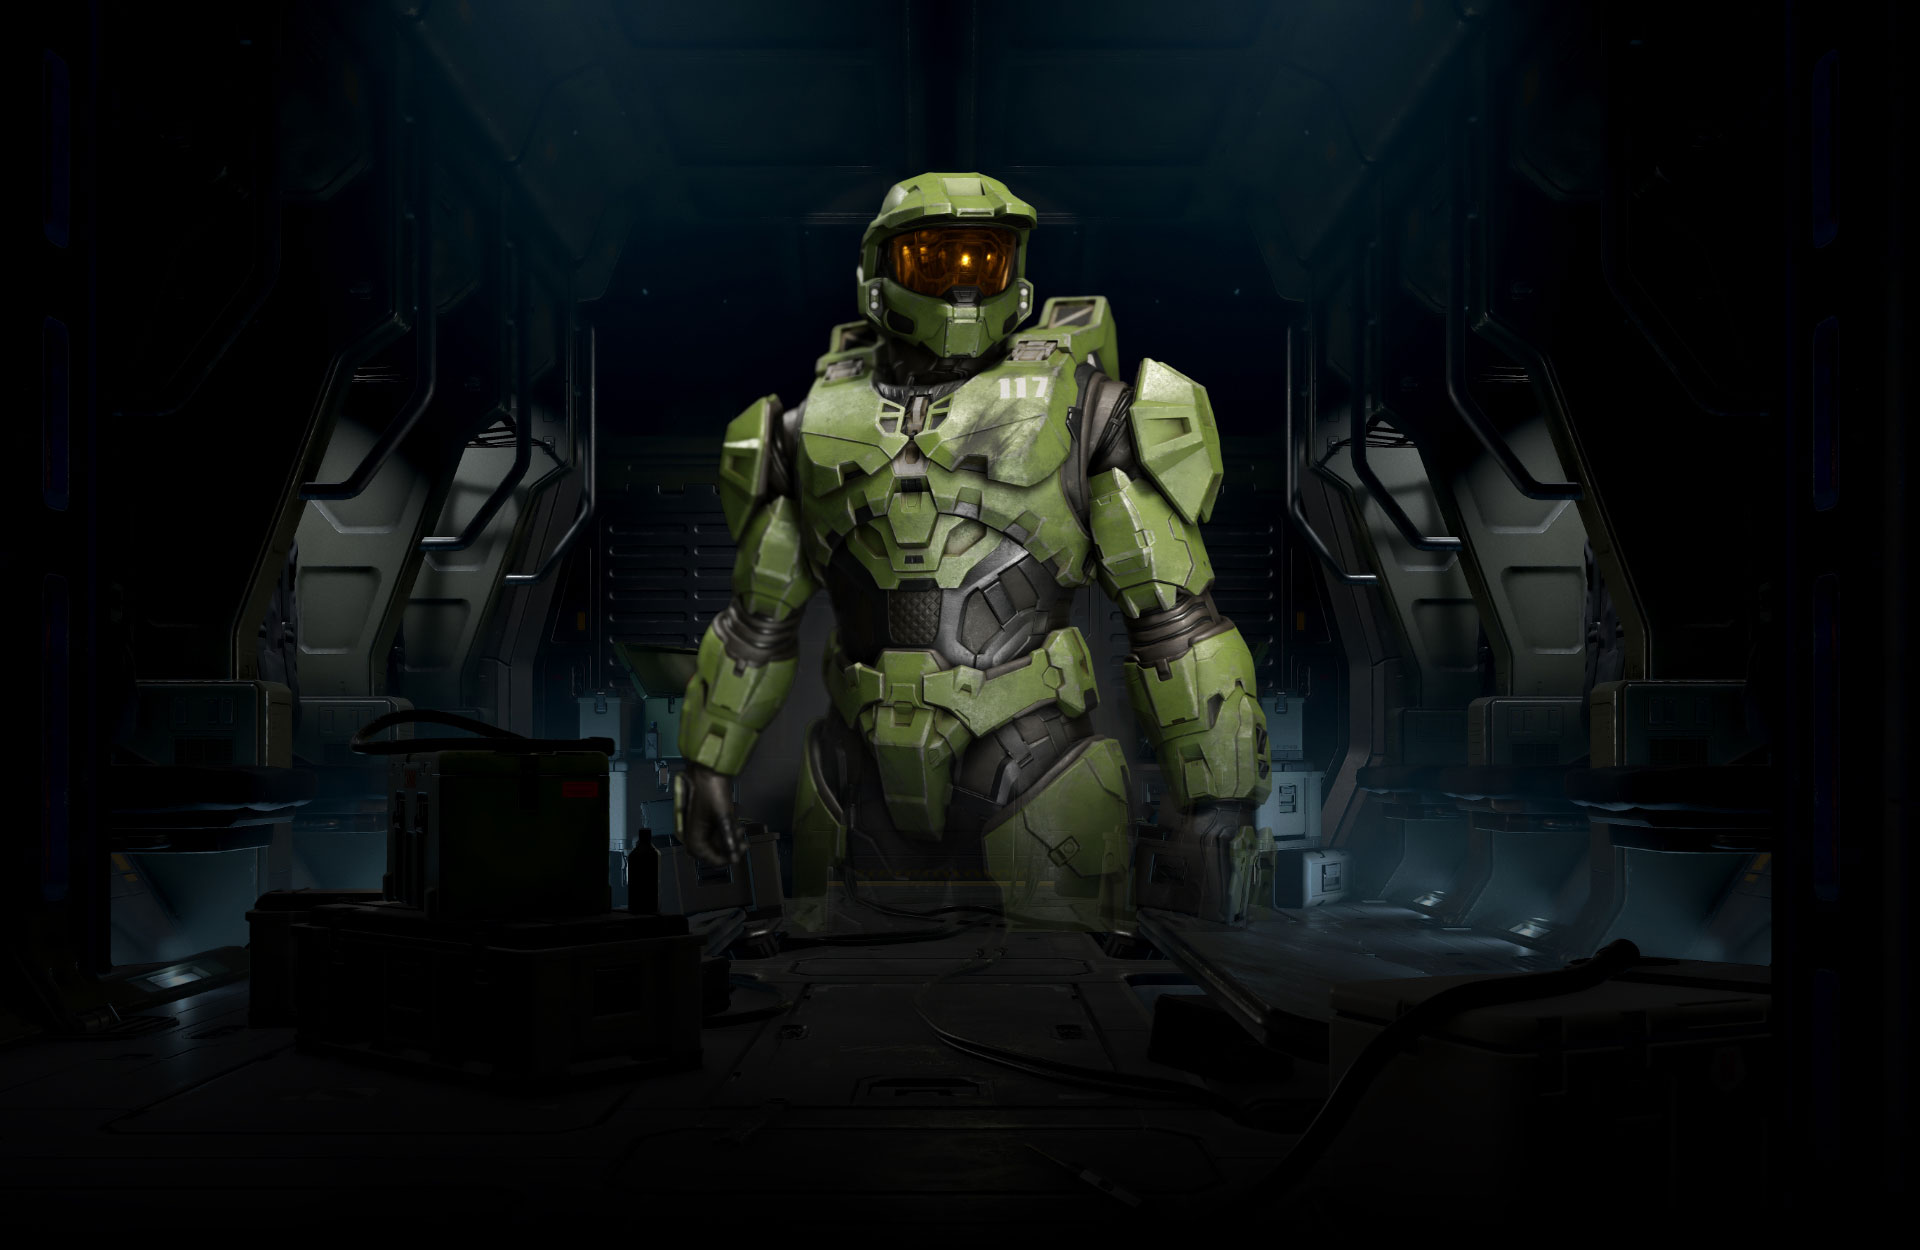 Halo Infinite士官長站在燈光昏暗的房間裡，他胸前 “117” 下的盔甲正面有點受損。